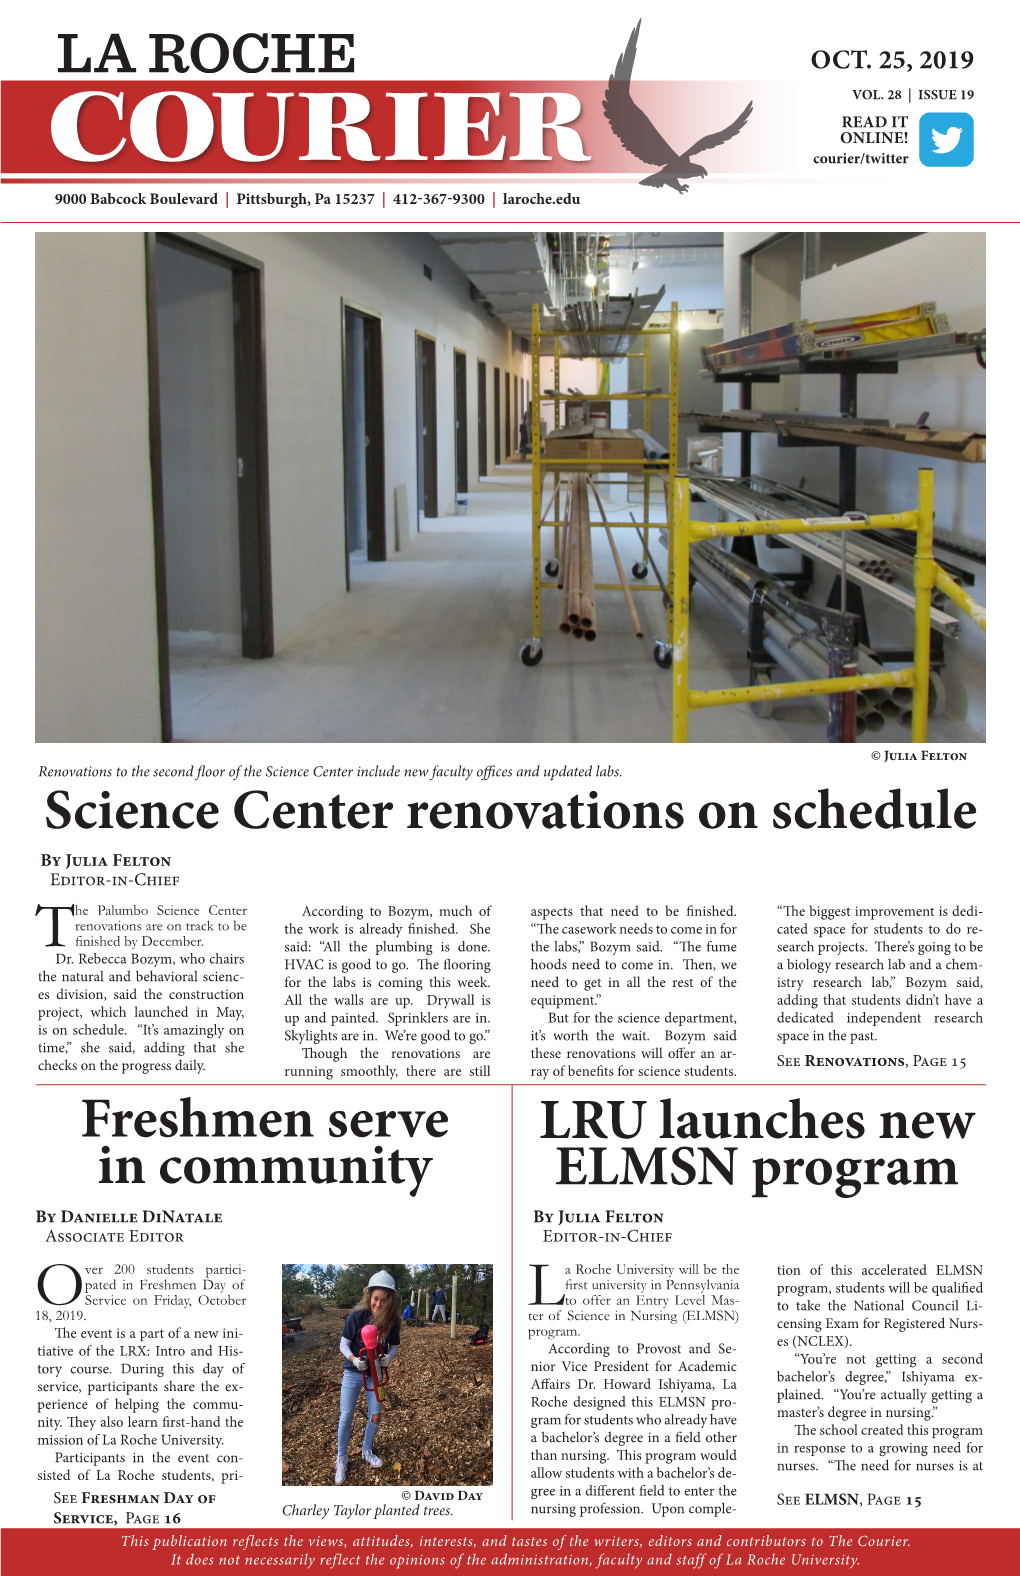 Science Center Renovations on Schedule Freshmen Serve in Community LRU Launches New ELMSN Program